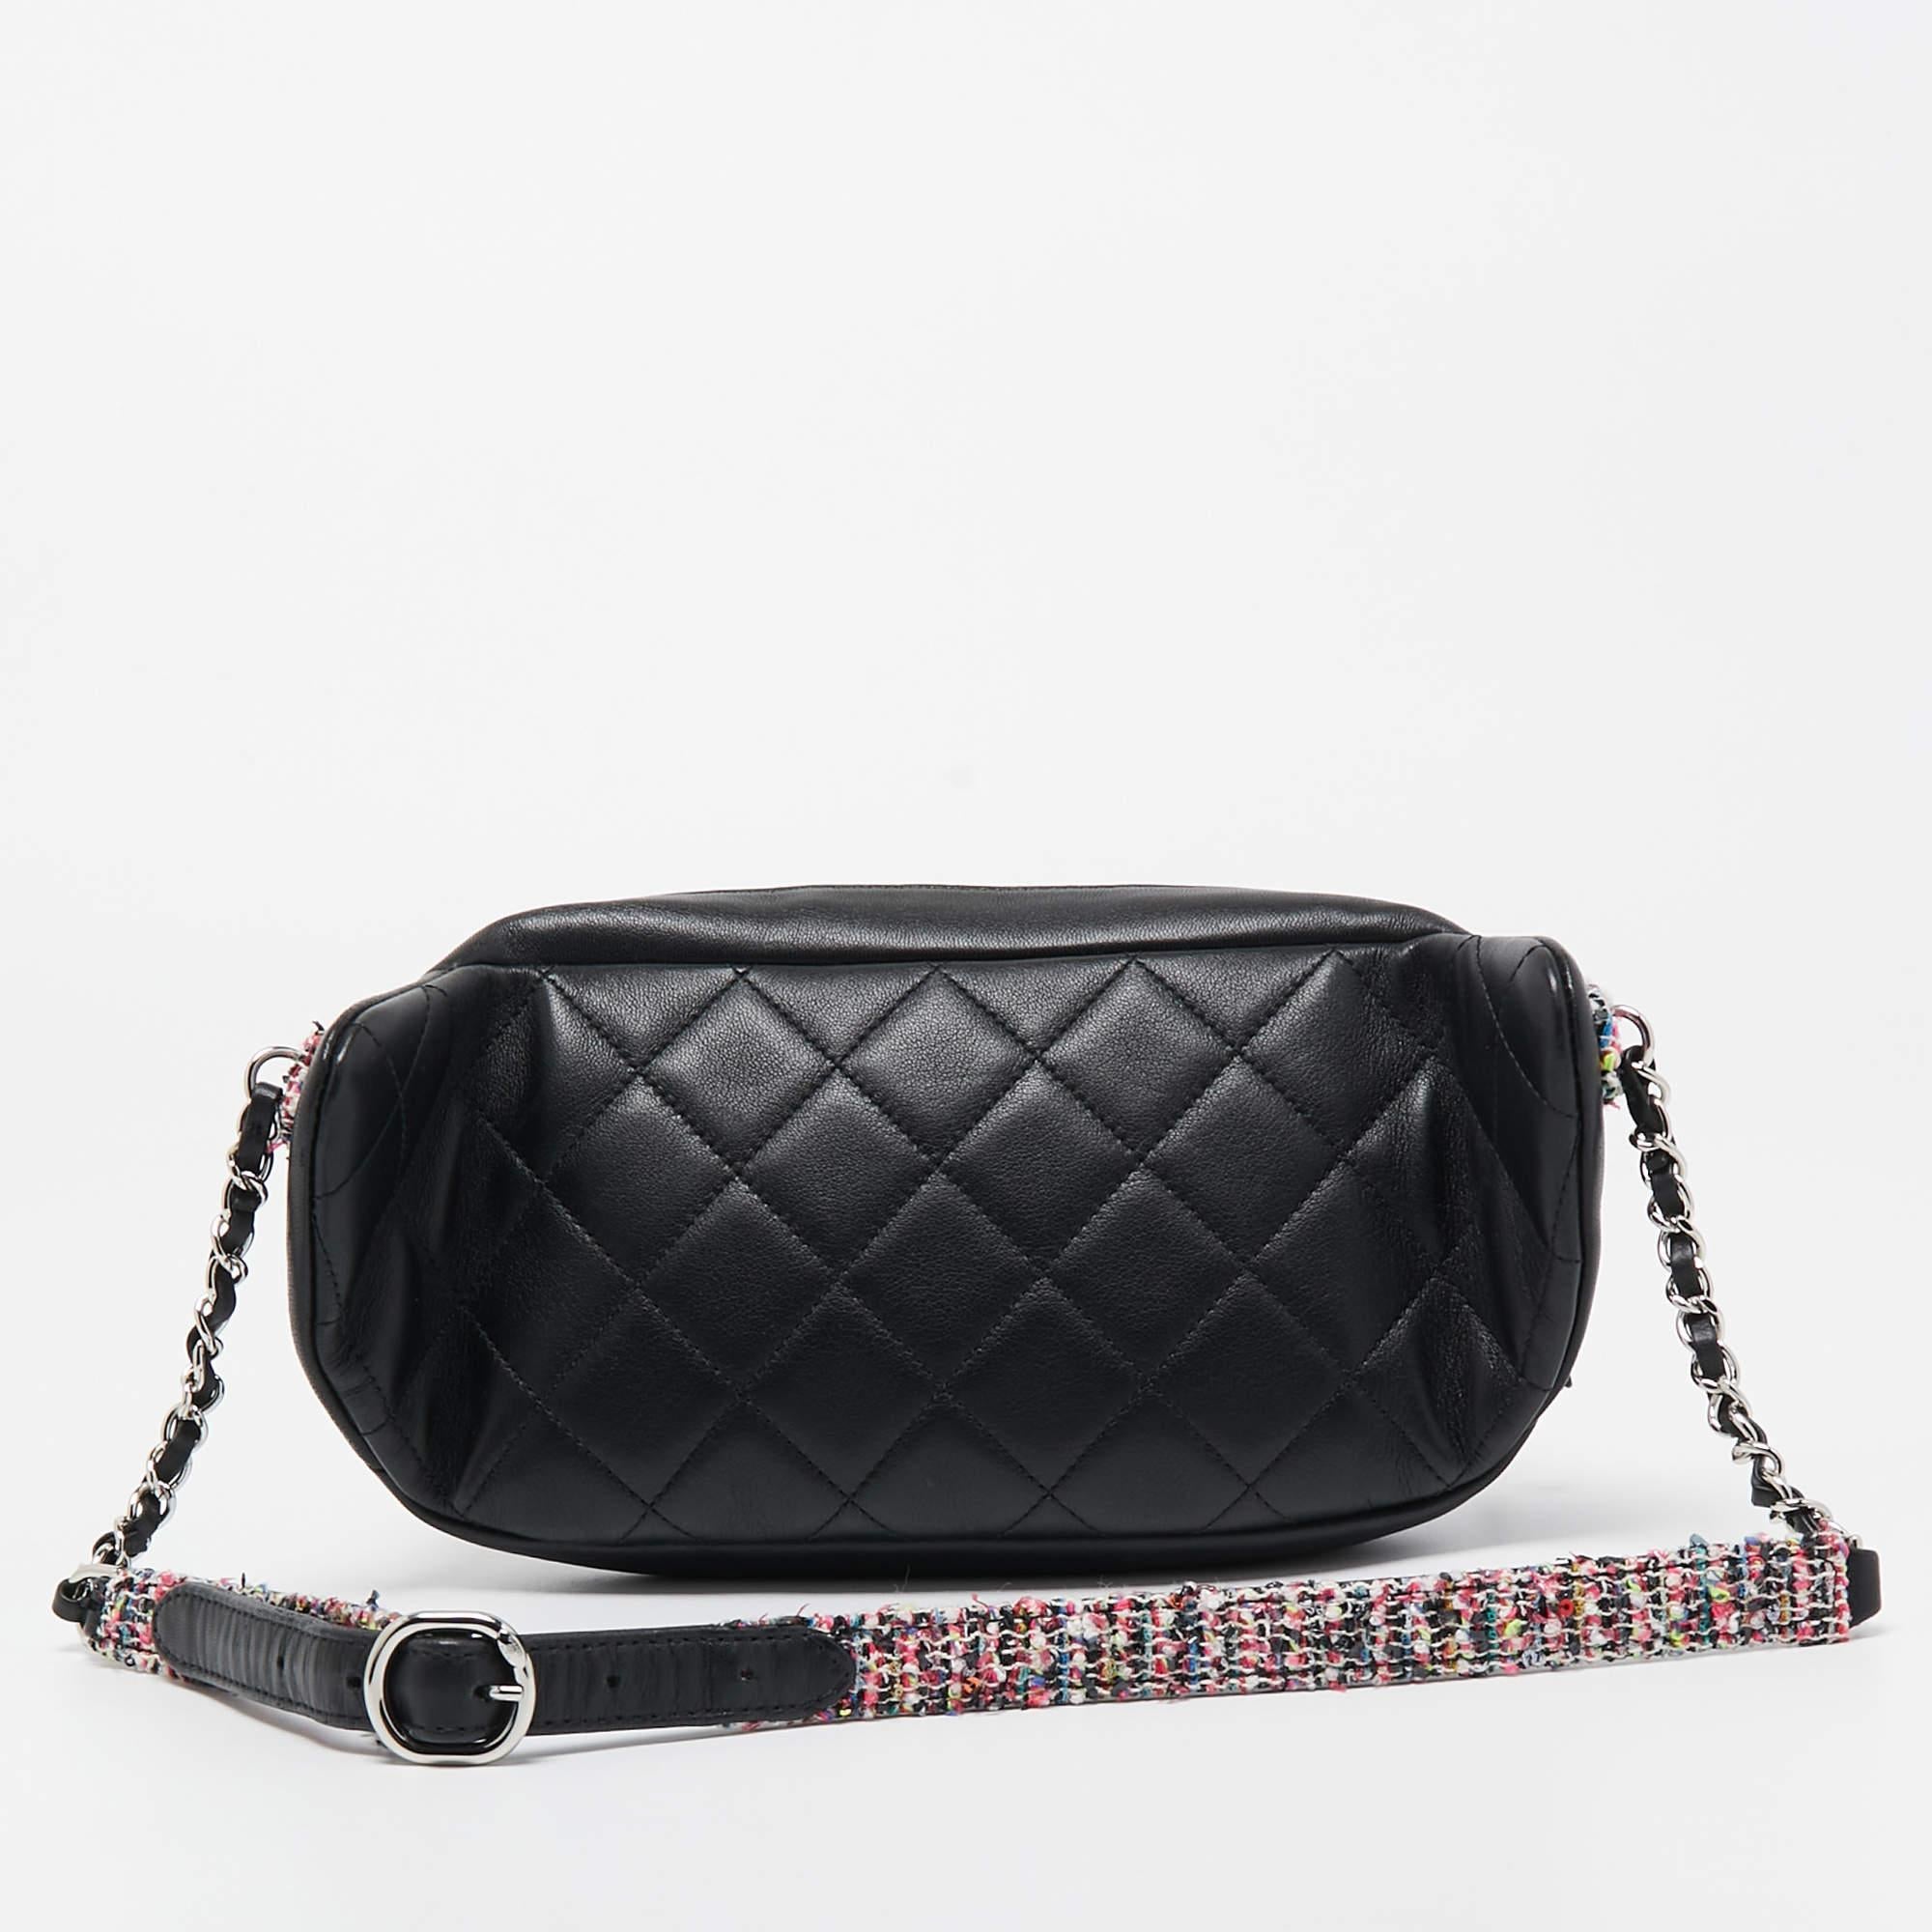 Chanel Black Quilted Leather and Tweed Elegant Trim Waist Belt Bag 6